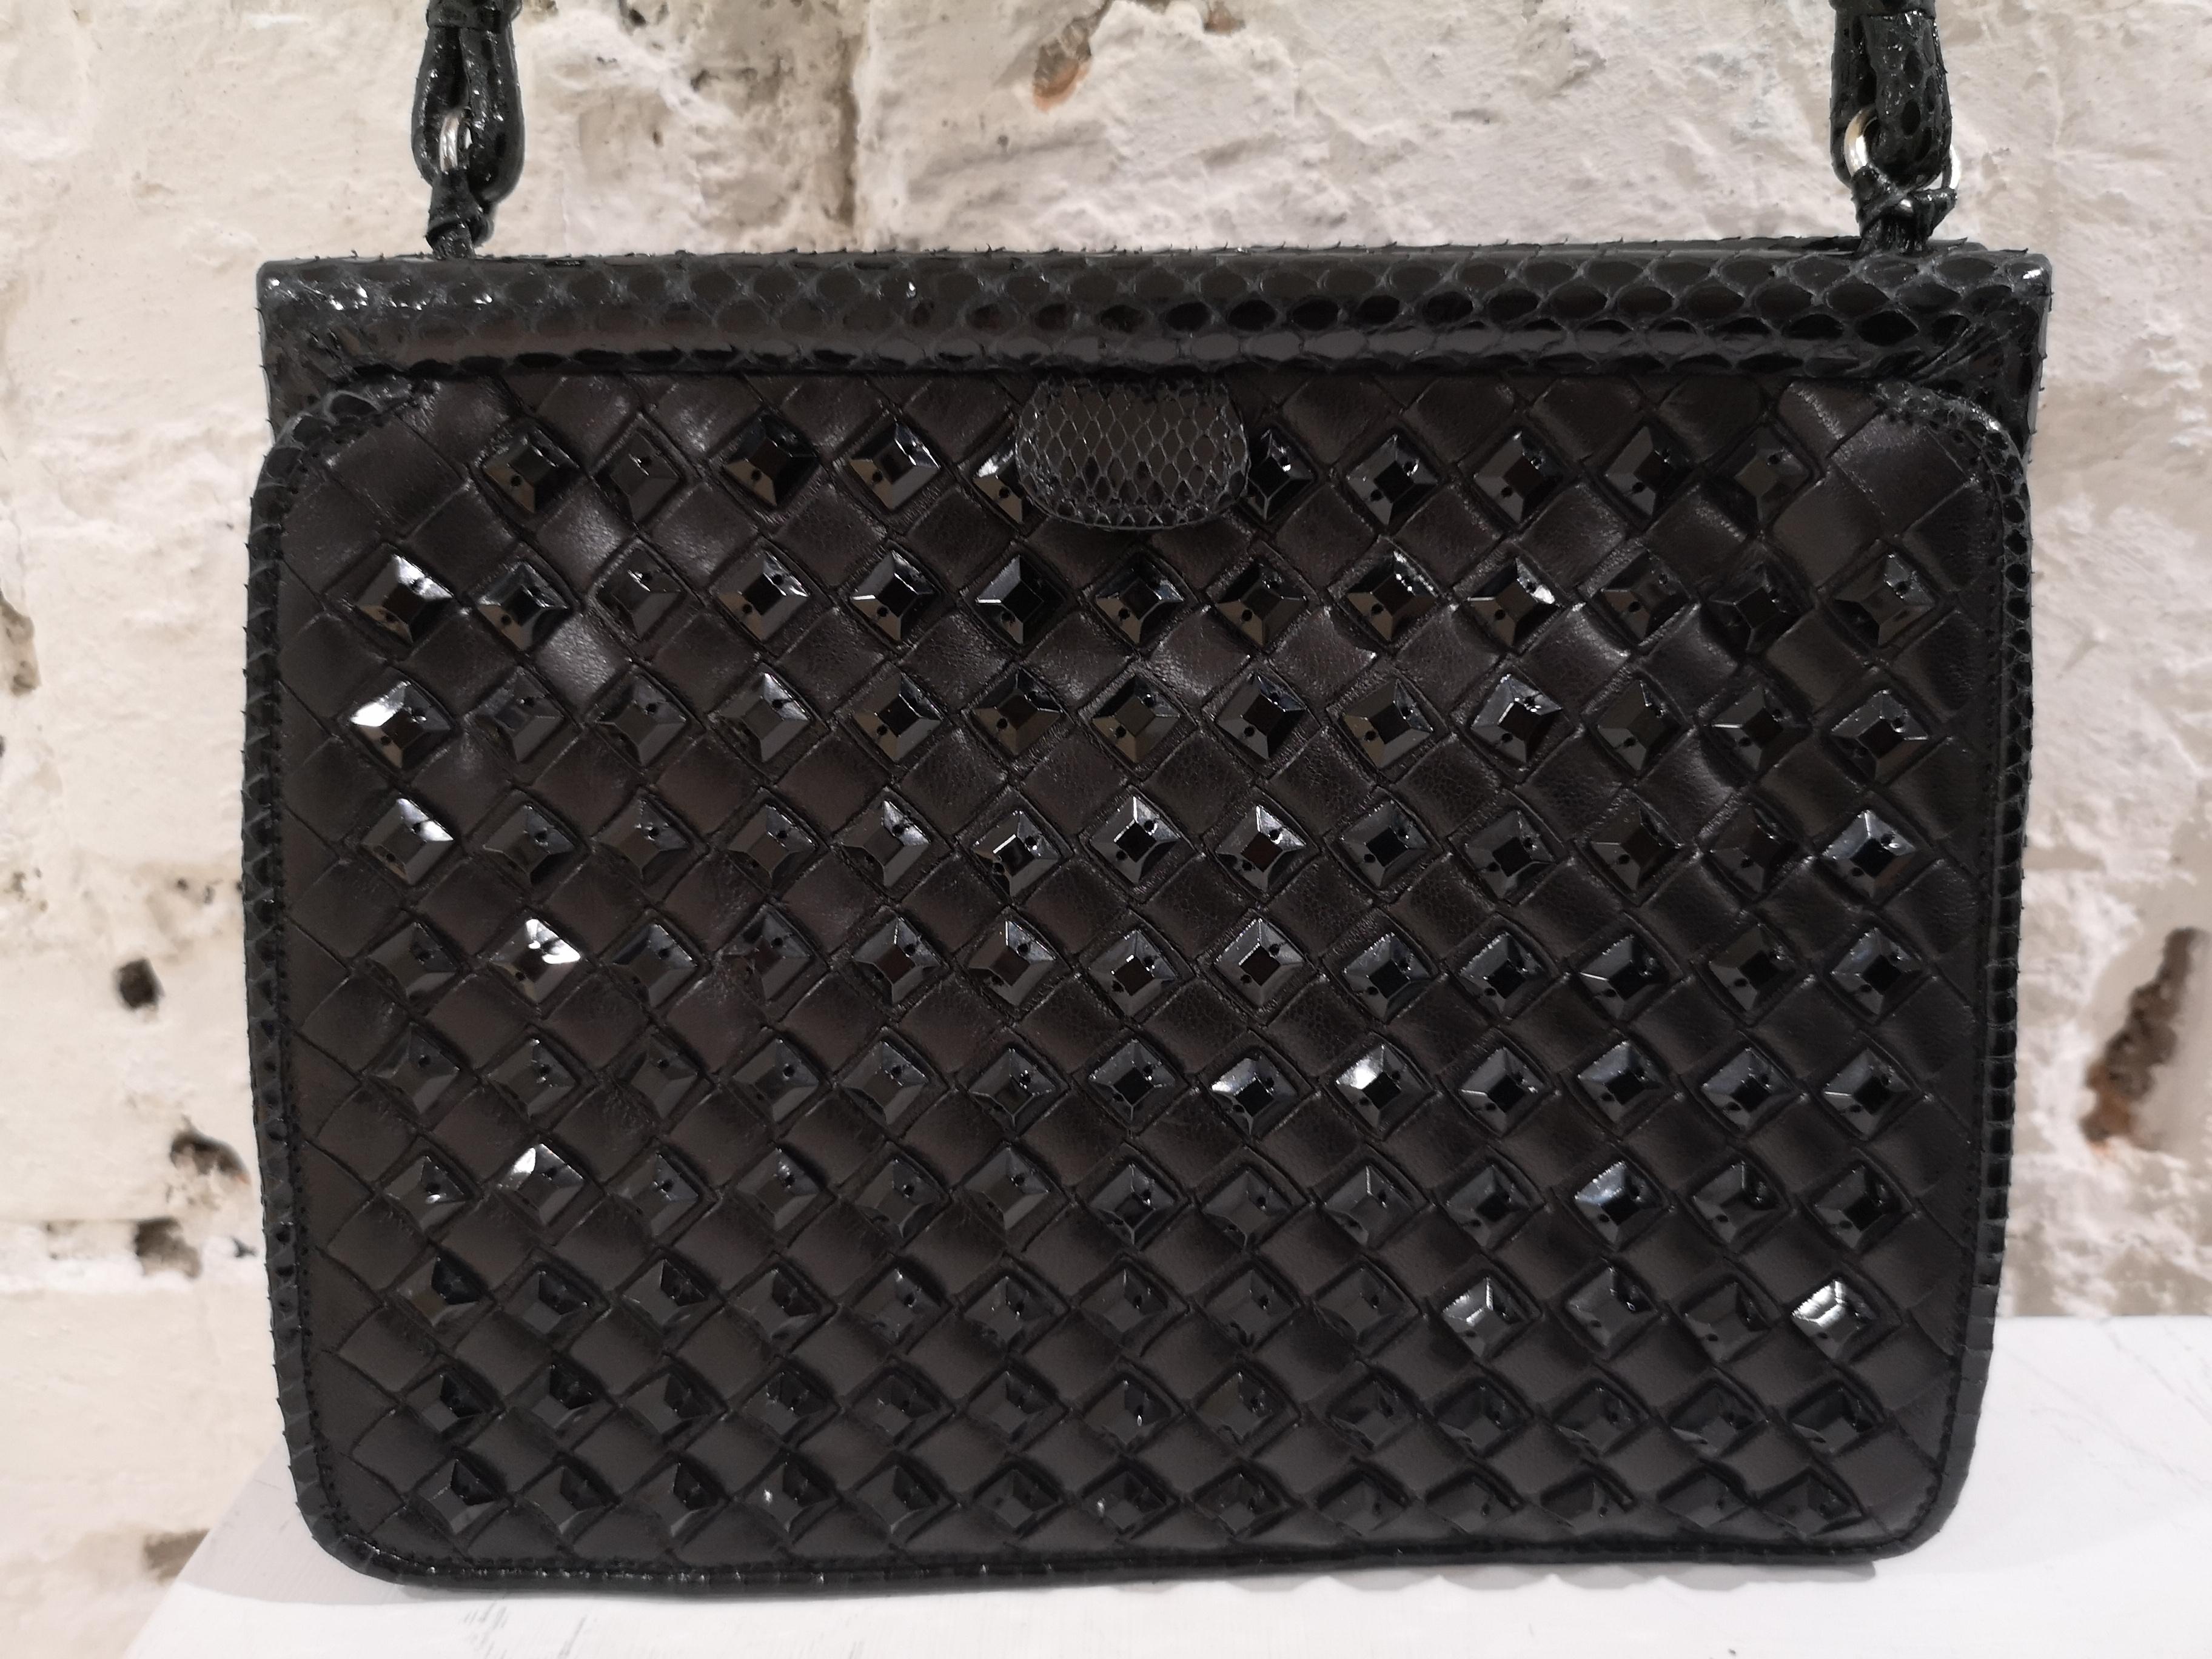 Bottega Veneta black python skin beads pochette / handbag
totally made in italy
measurements: 16 * 21 * 7 cm